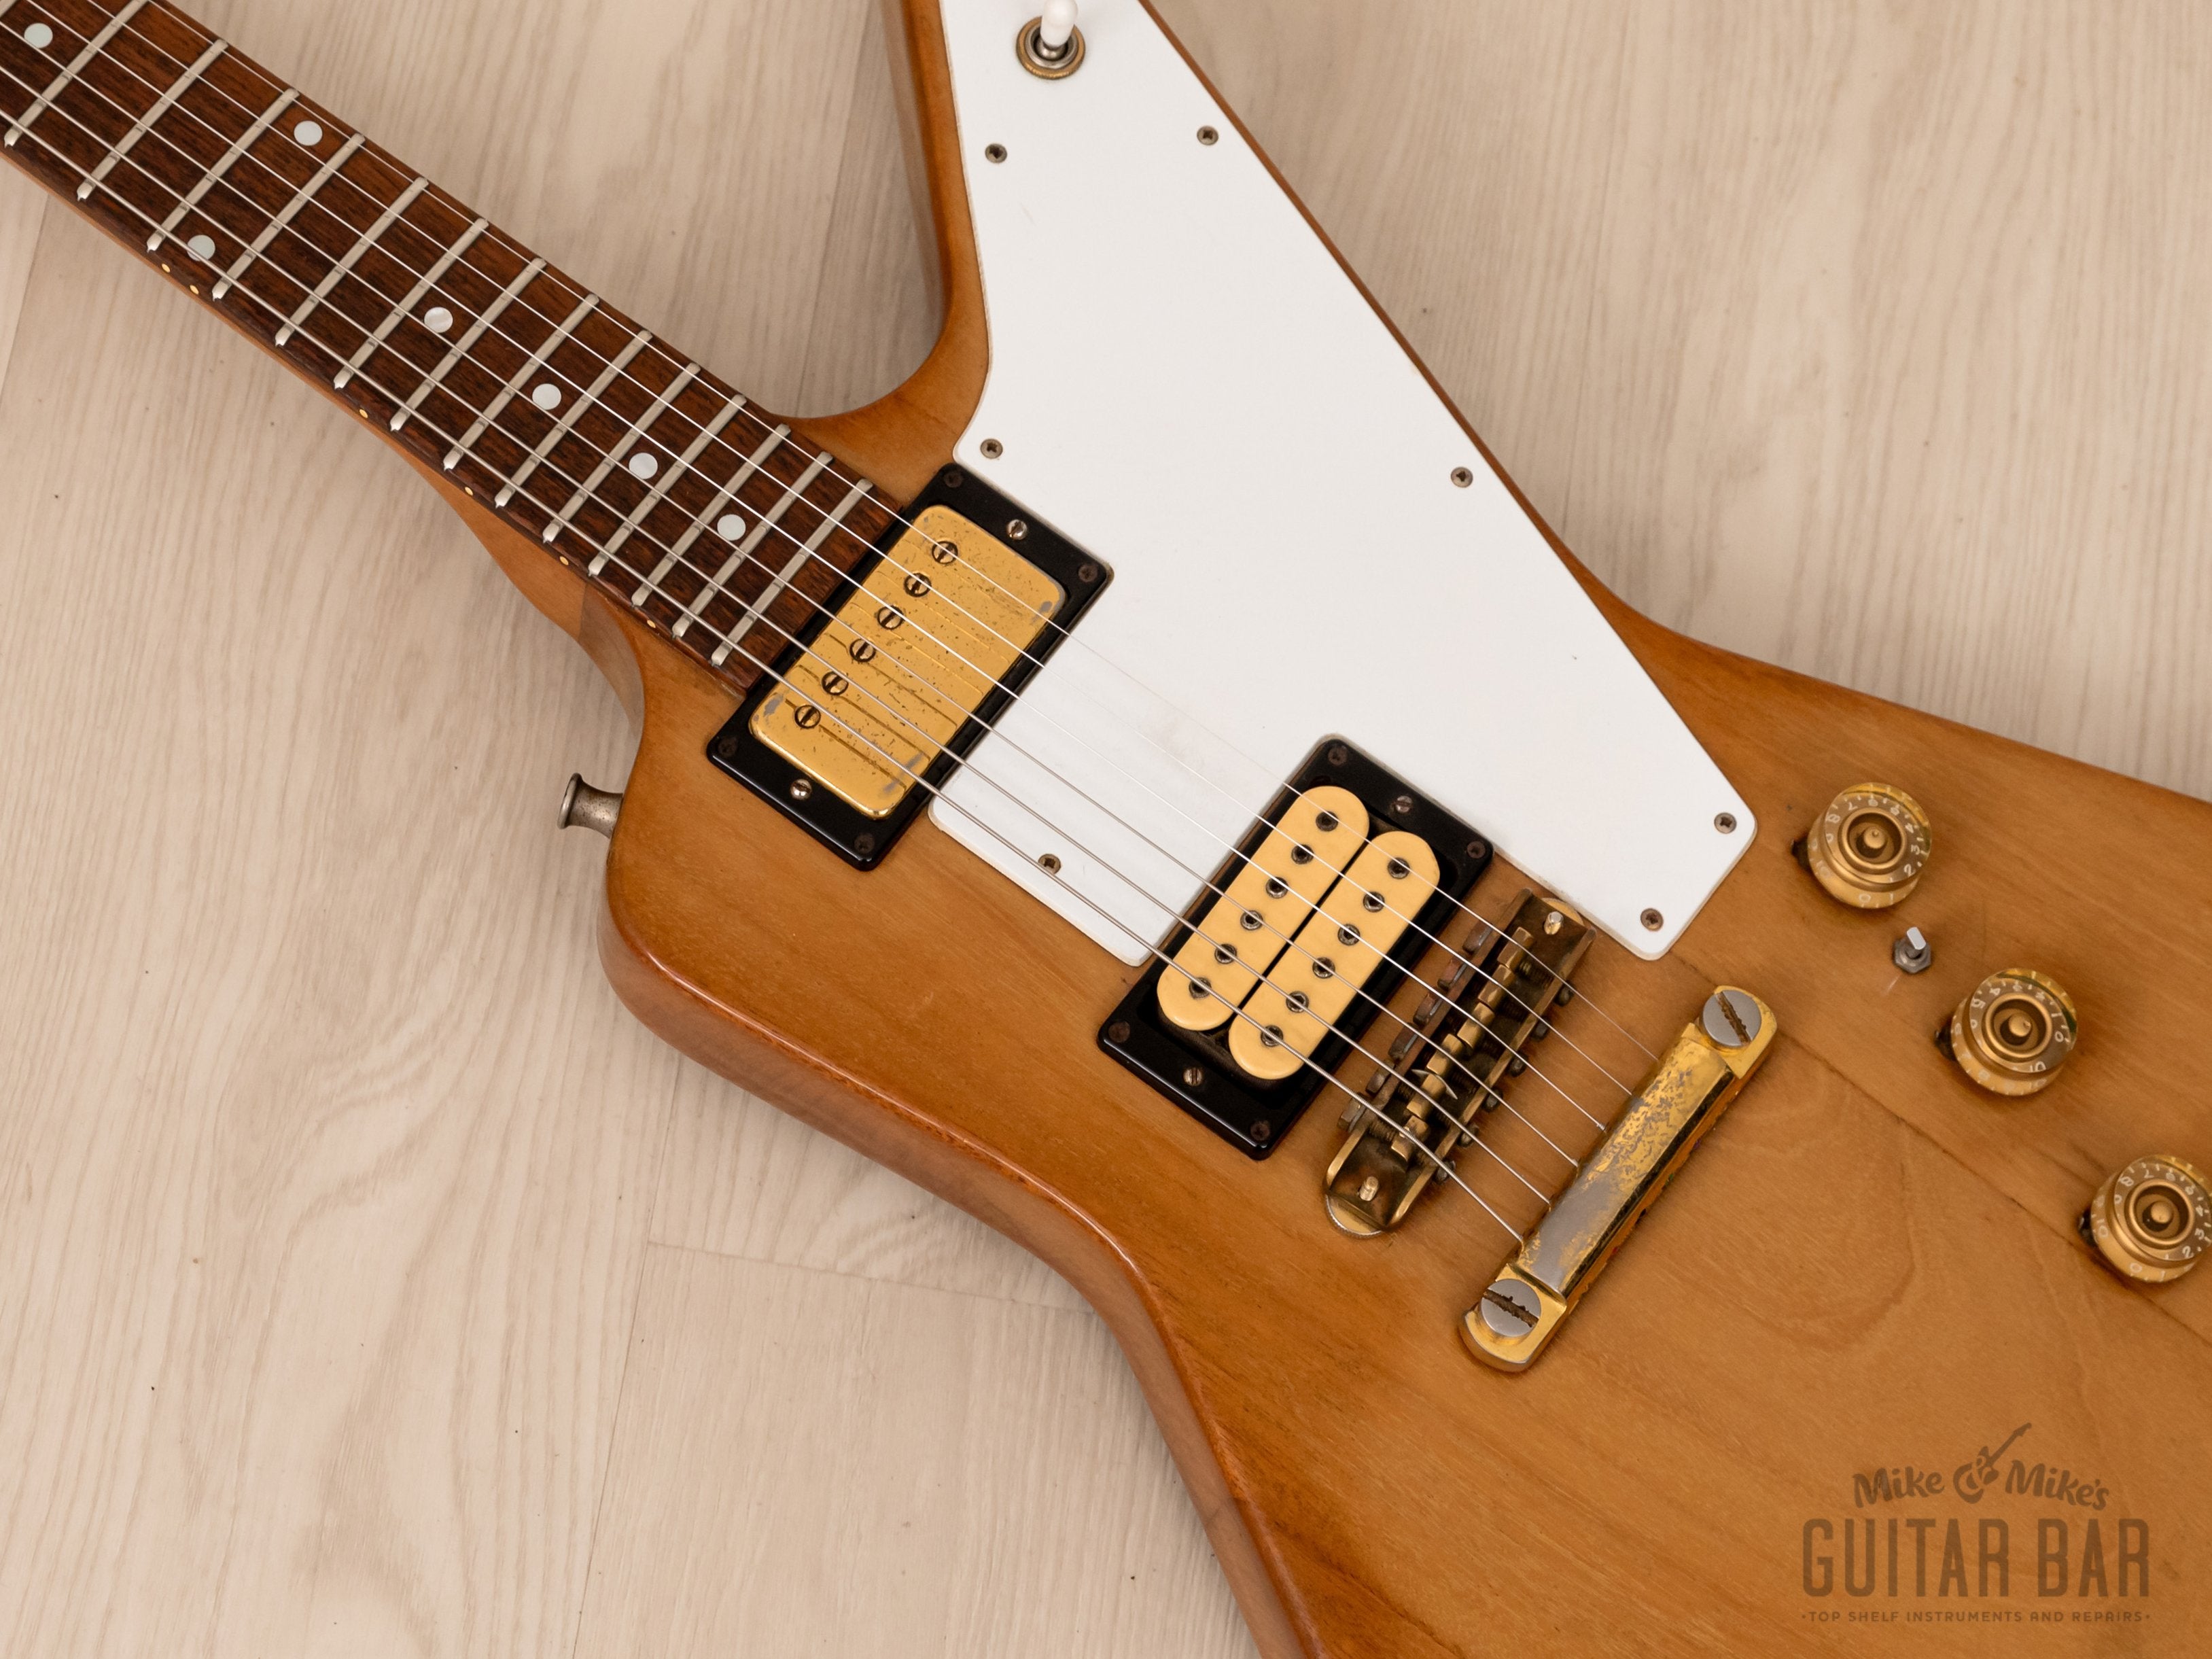 1976 Gibson Explorer Limited Edition Vintage Guitar Natural w/ '50s Neck Carve, Case